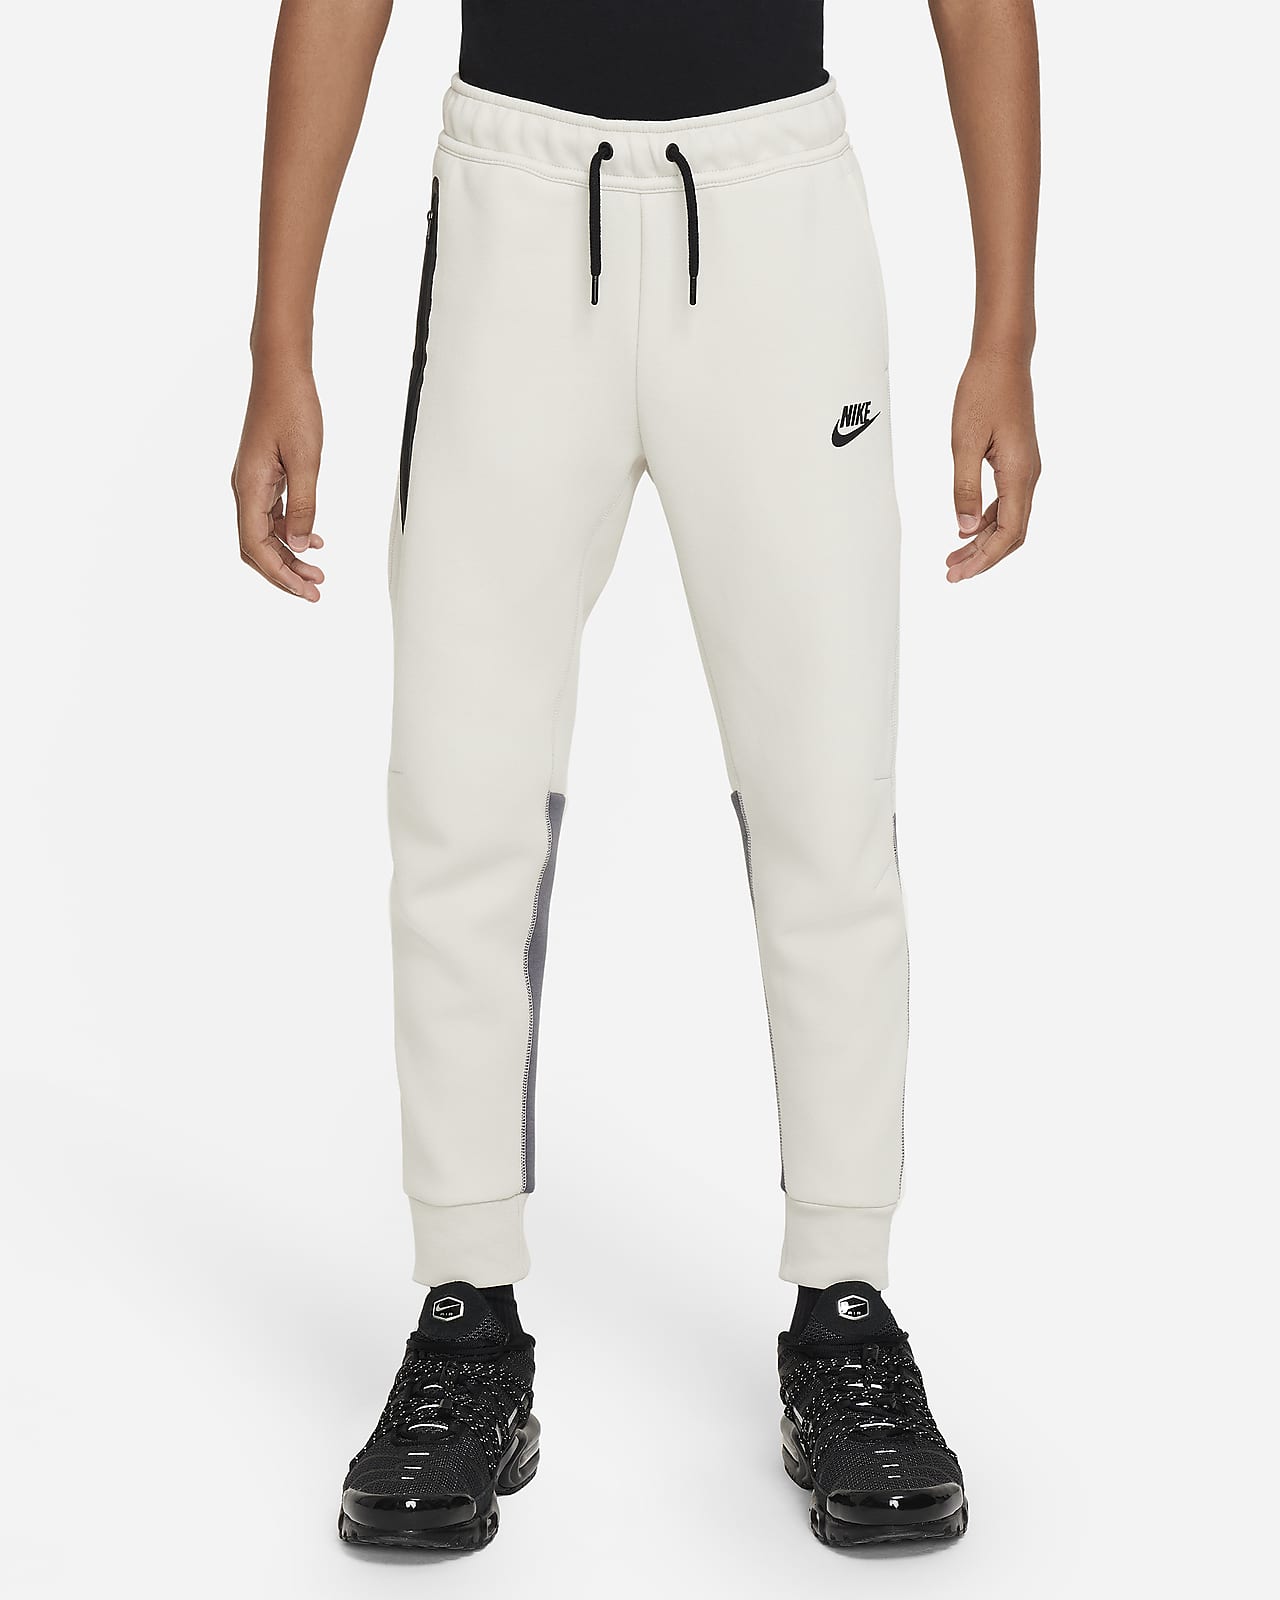 Calças Nike Sportswear Tech Fleece Júnior (Rapaz)